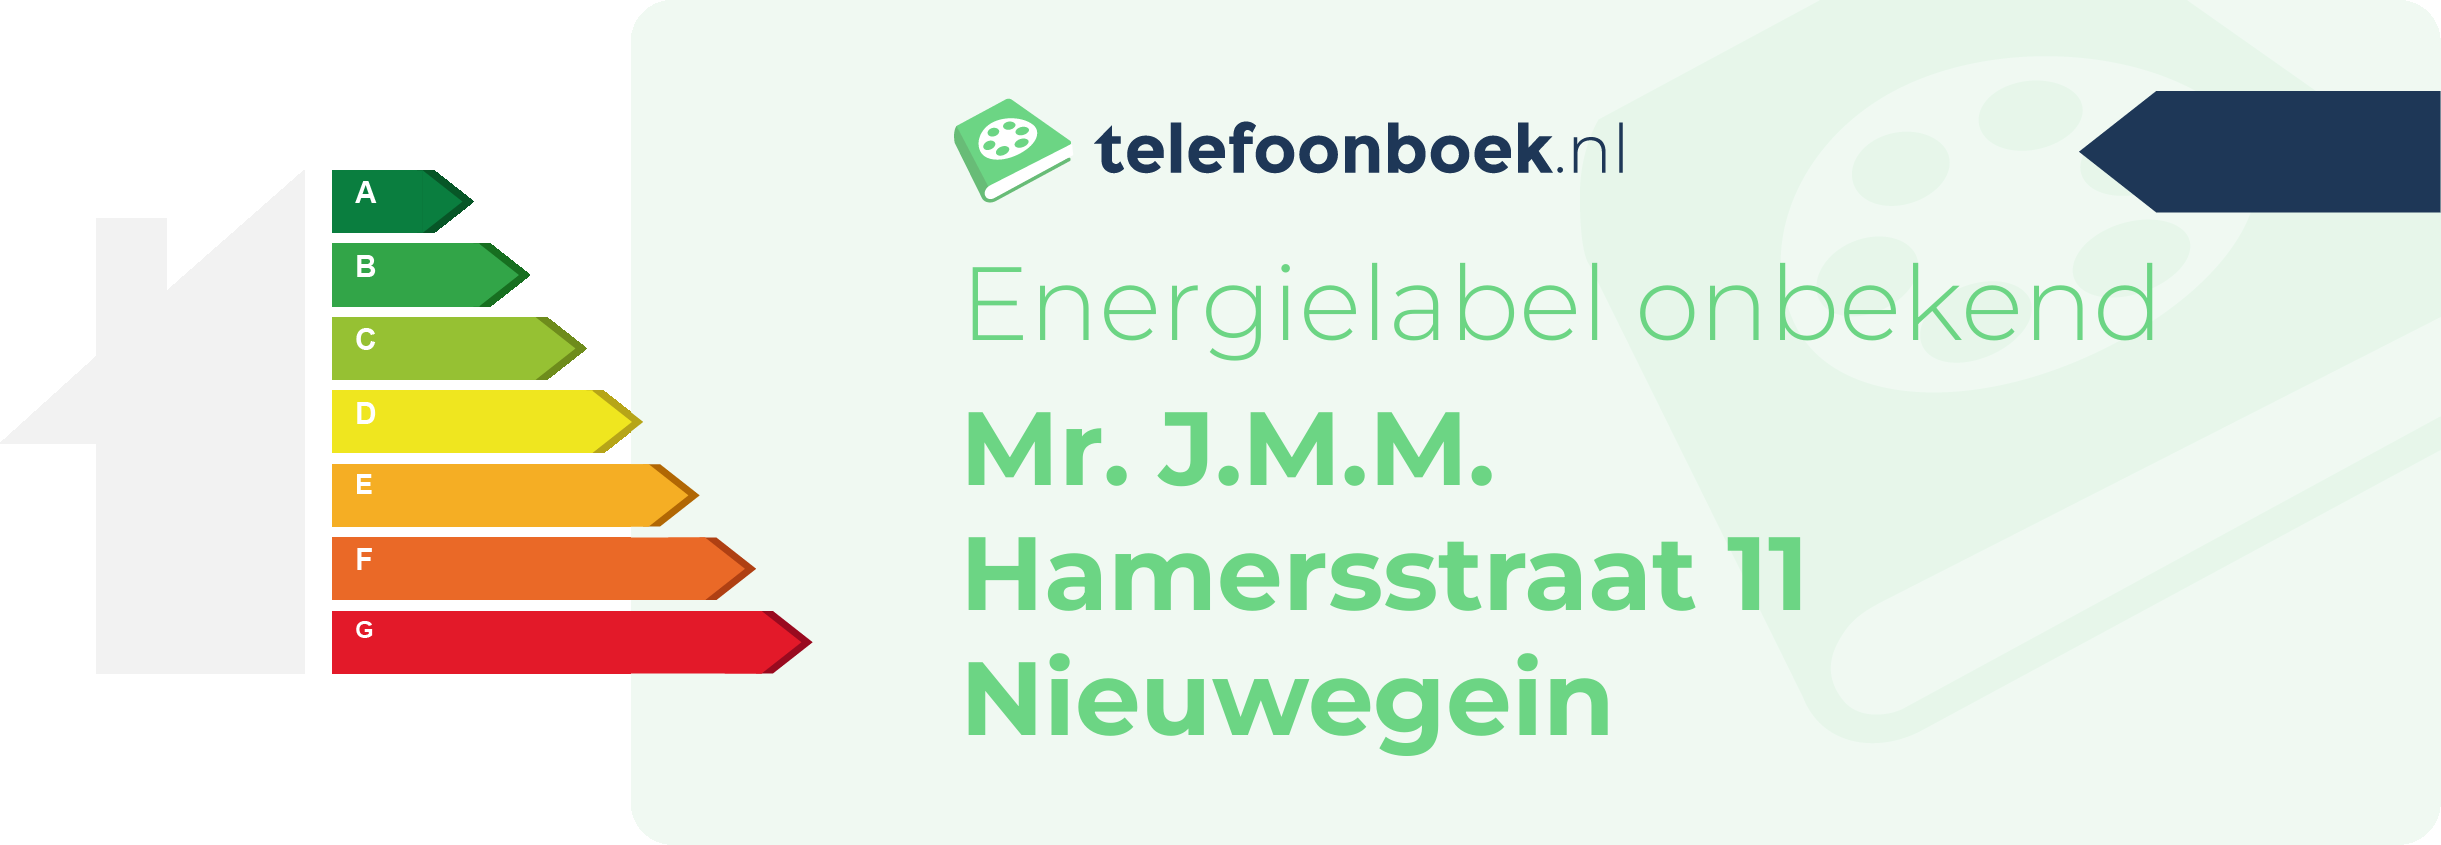 Energielabel Mr. J.M.M. Hamersstraat 11 Nieuwegein